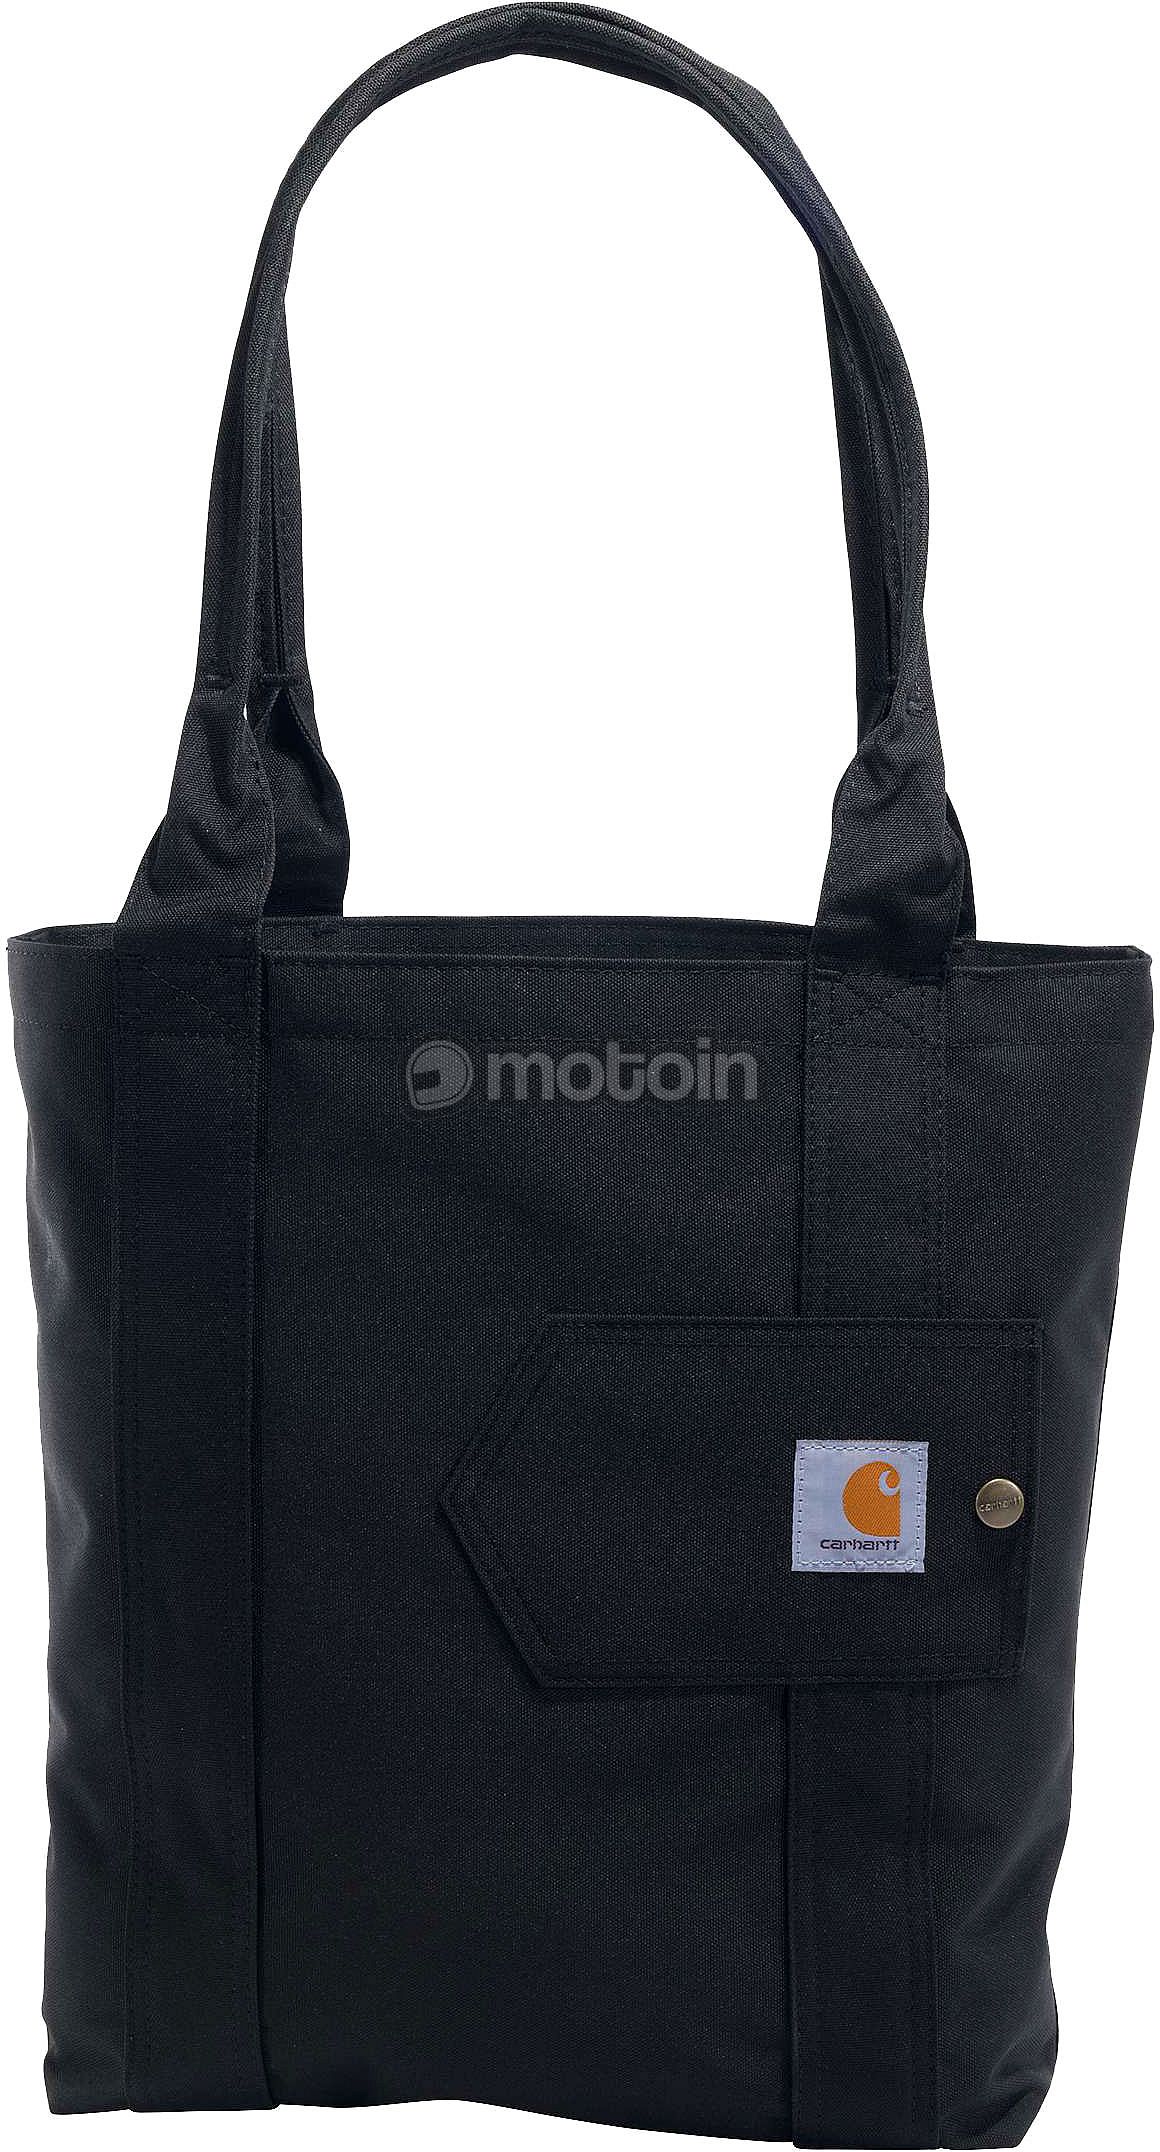 Mochila Carhartt WIP Philis Negro - mochilas y bolsas